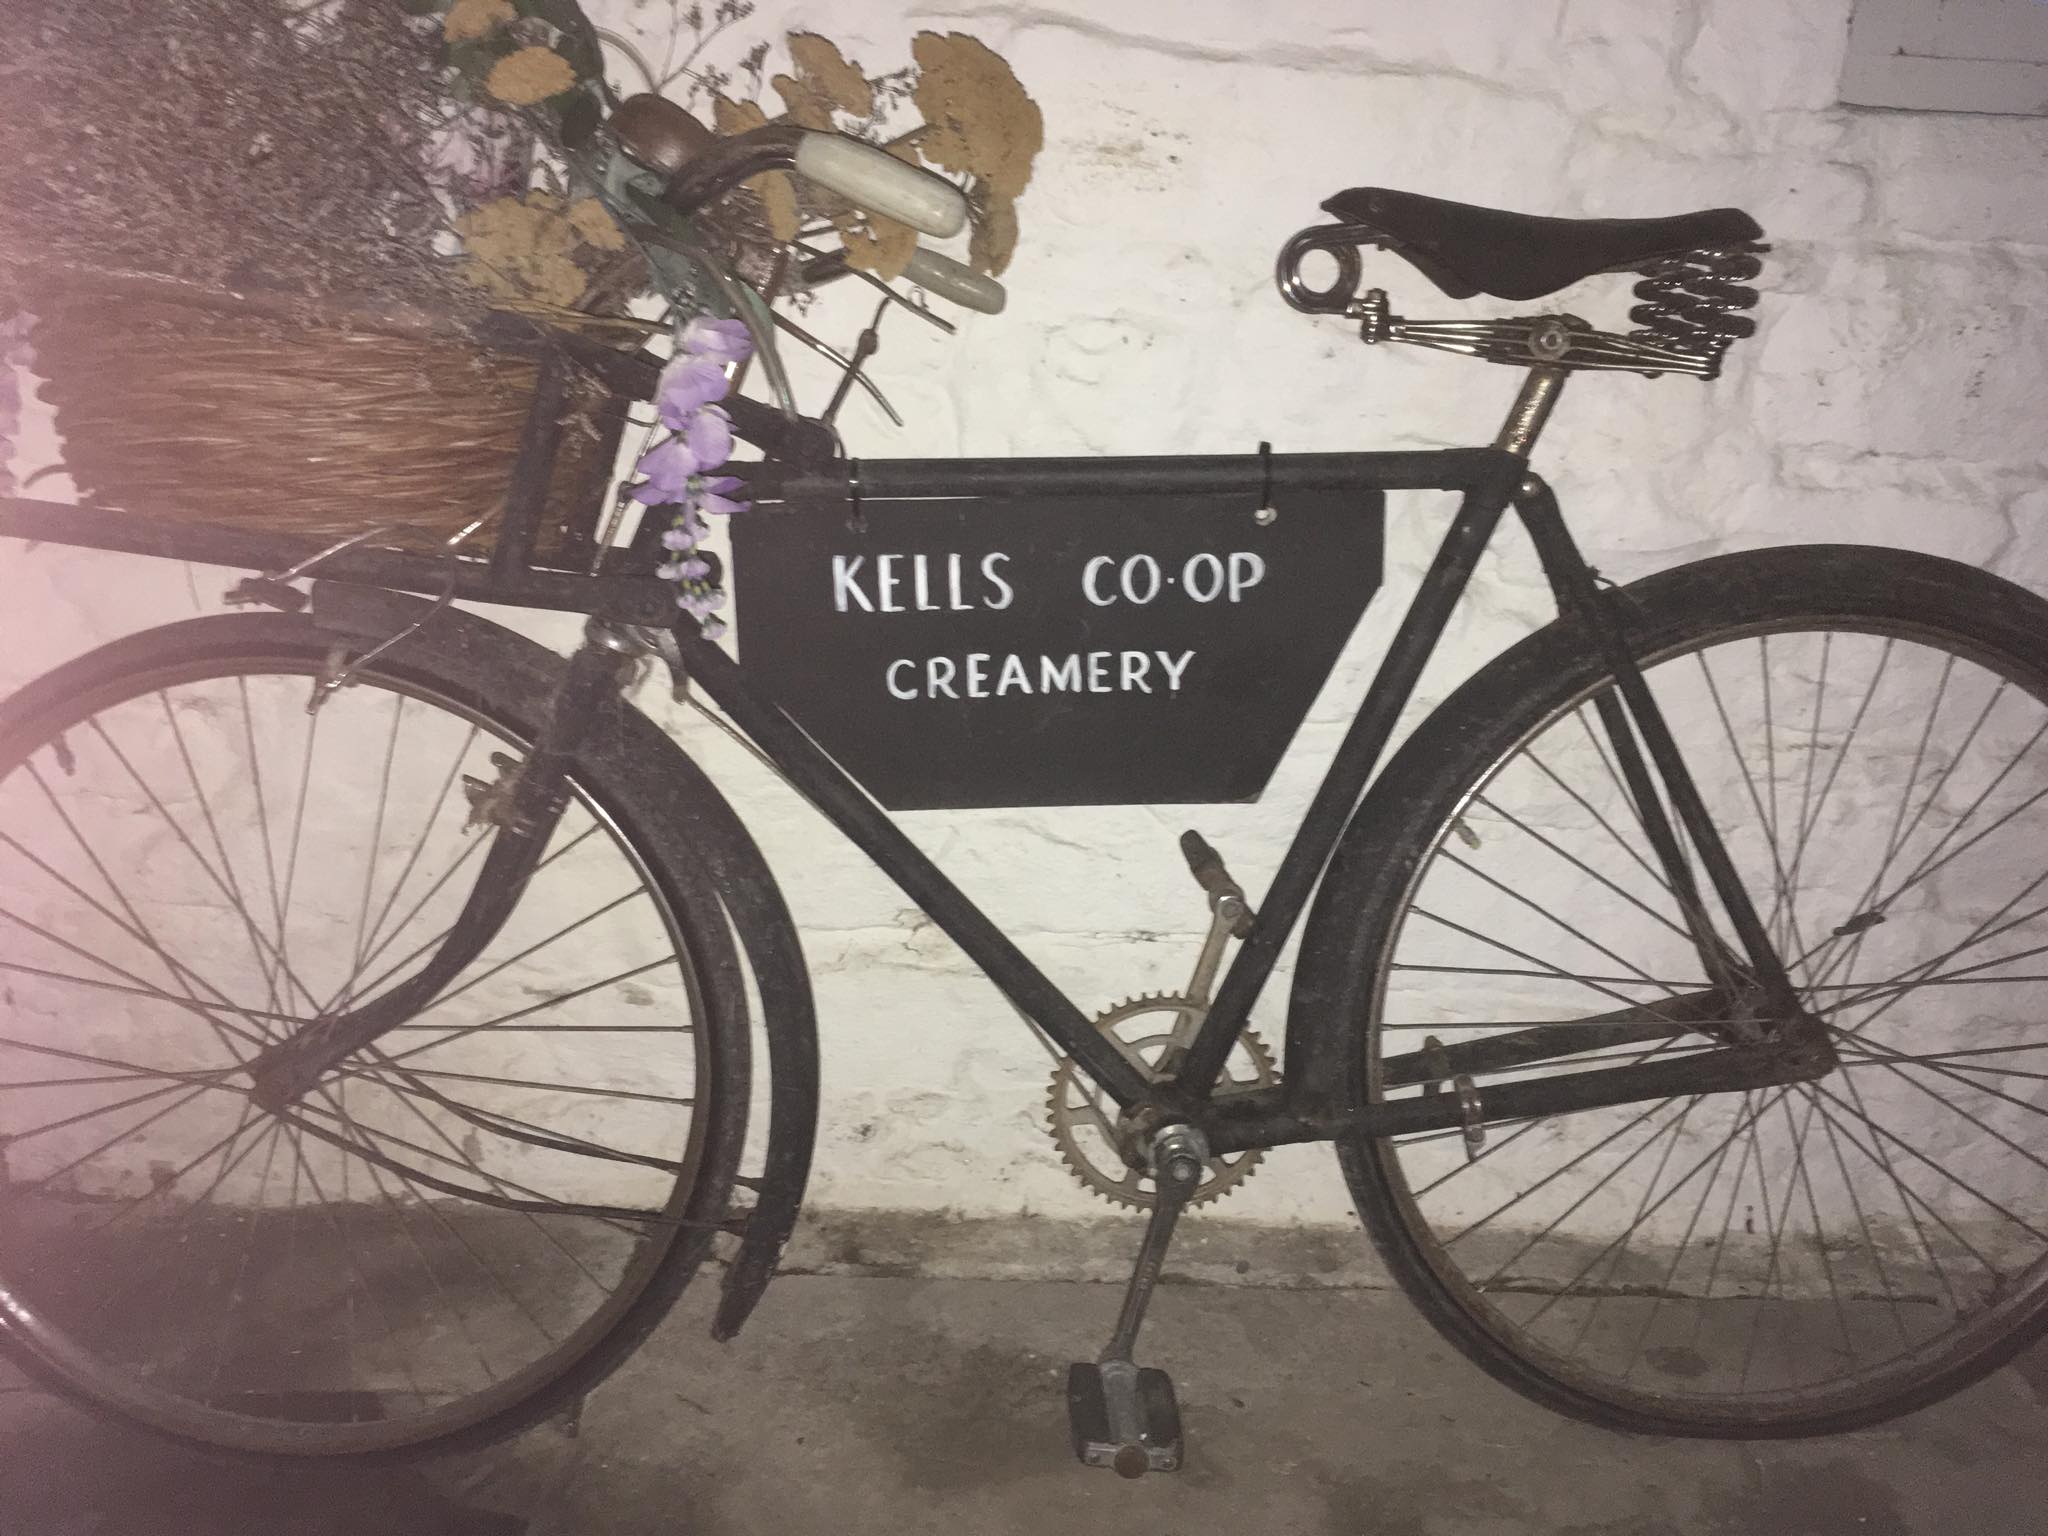 Creamery bike in Mullins Mill, Kells, Kilkenny.